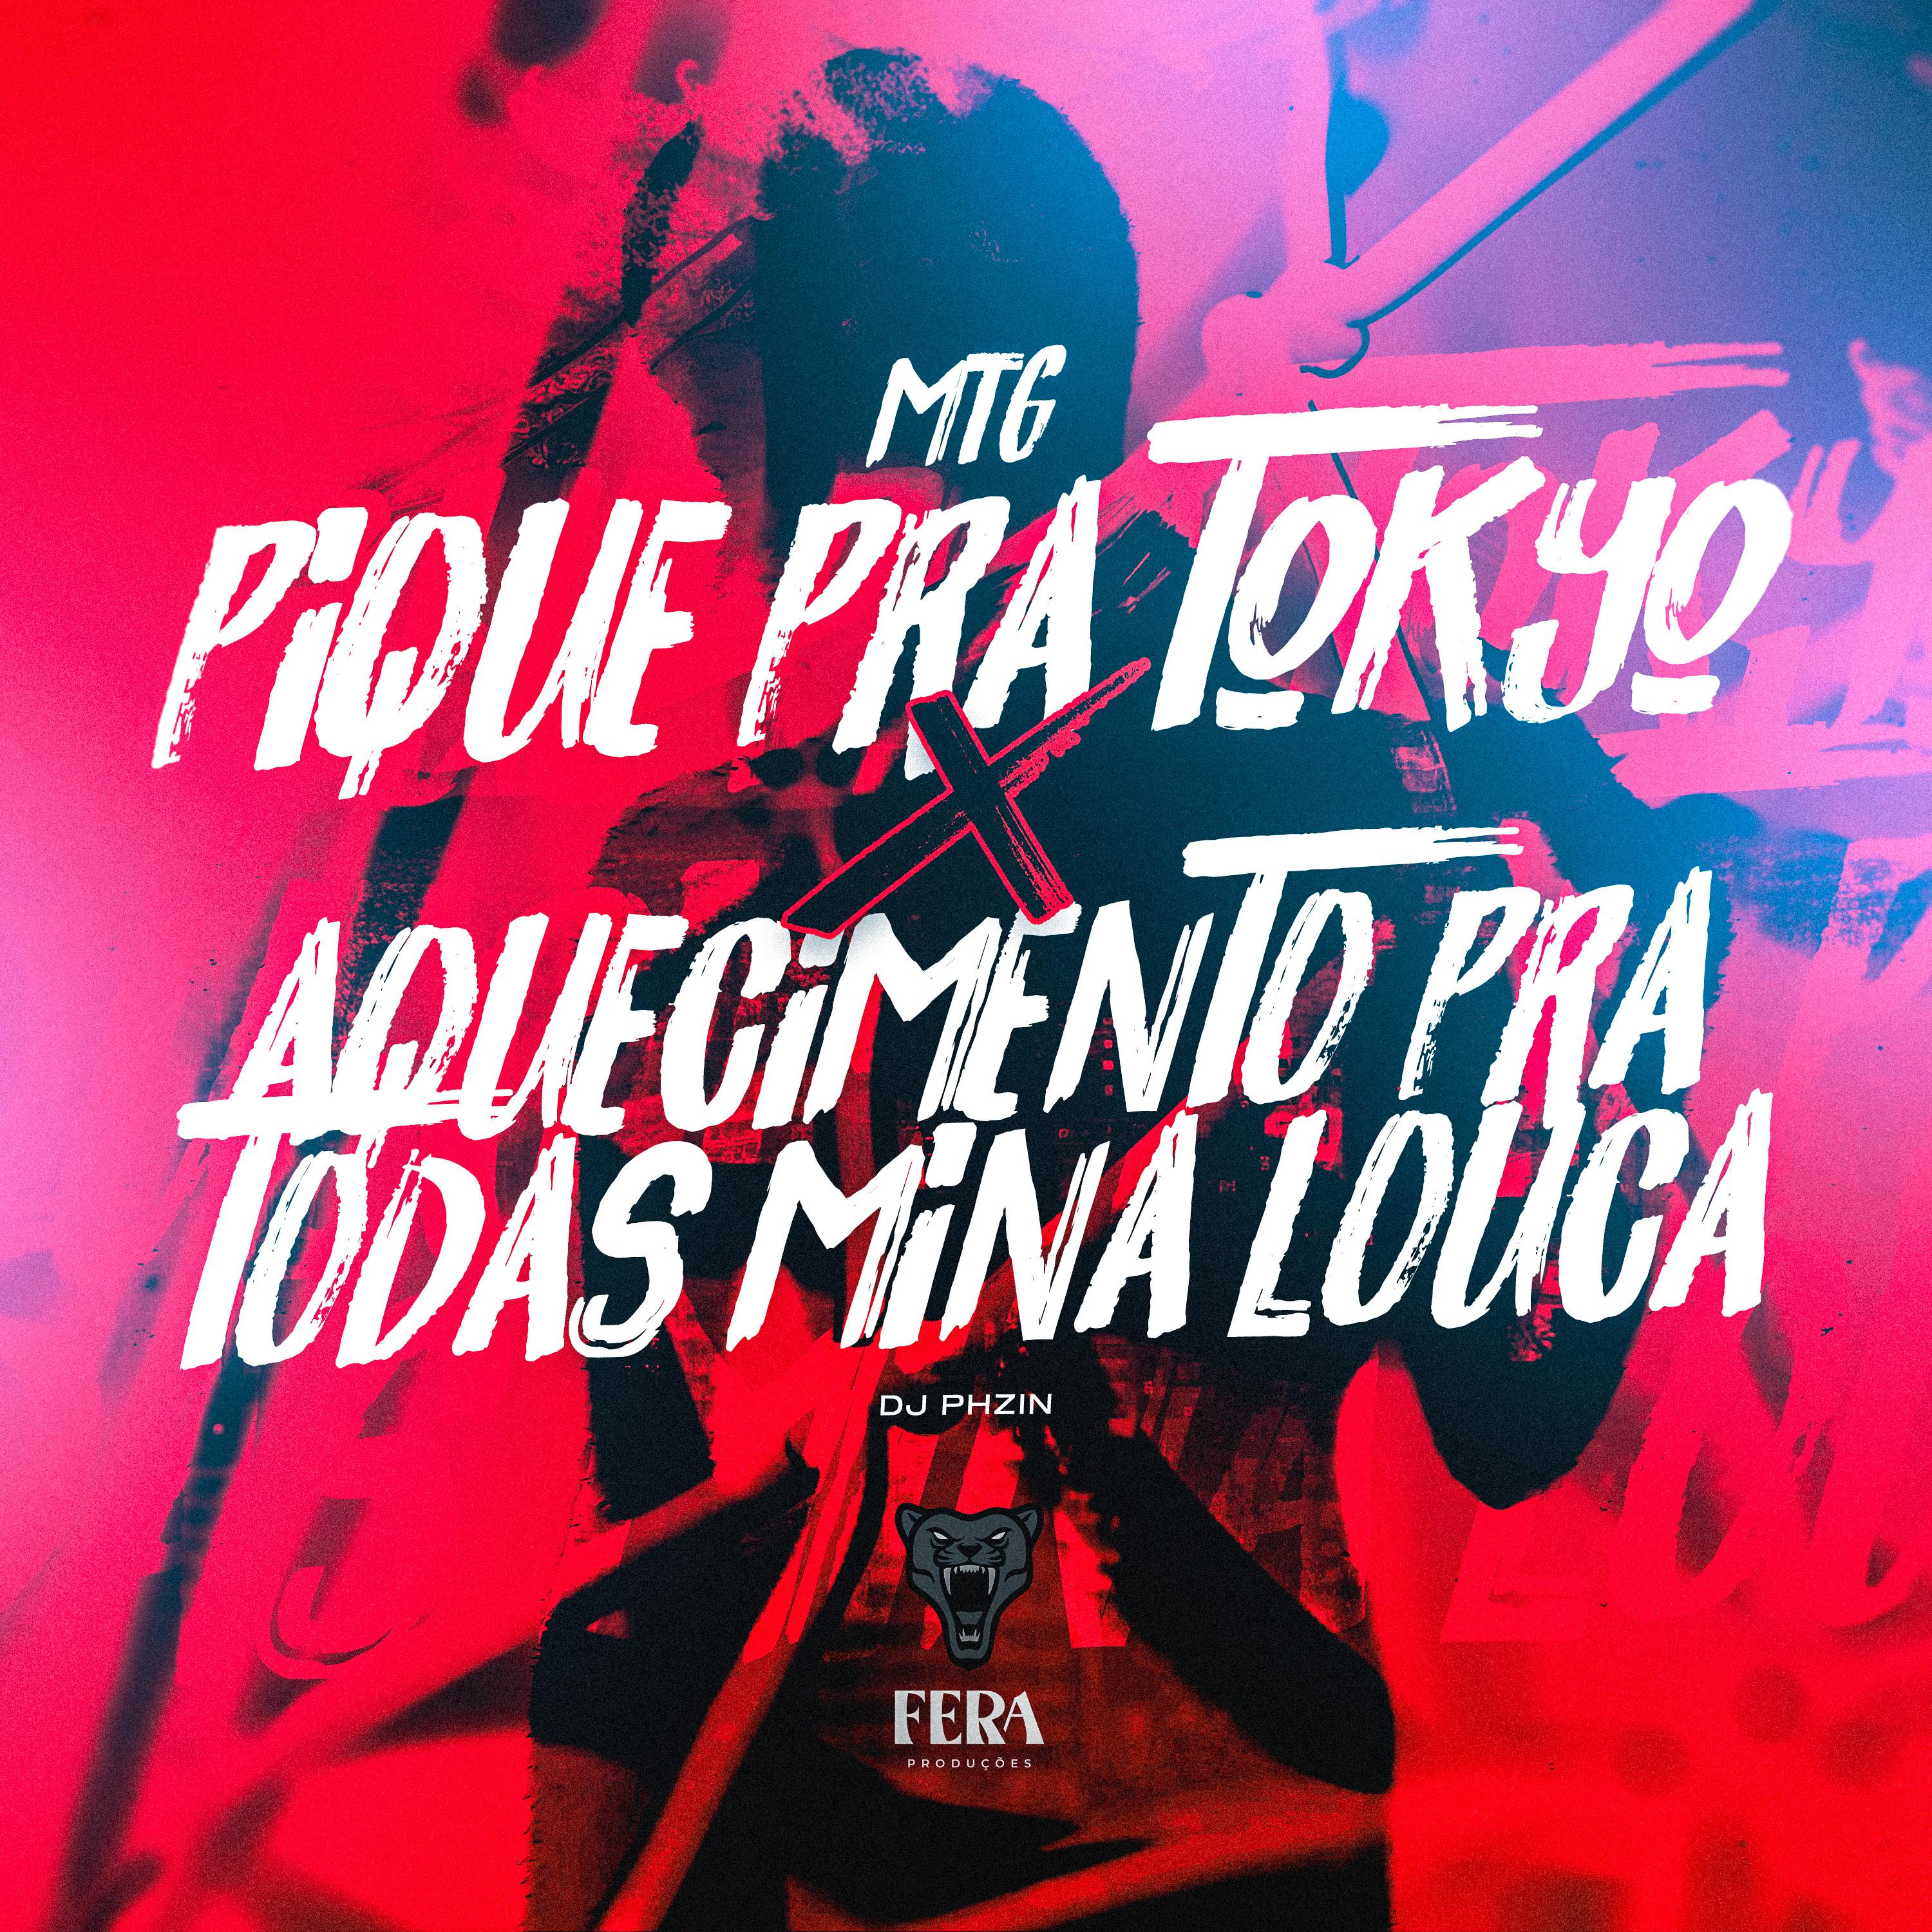 Постер альбома Mtg - Pique pra Tokyo X Aquecimento pra Todas Mina Louca